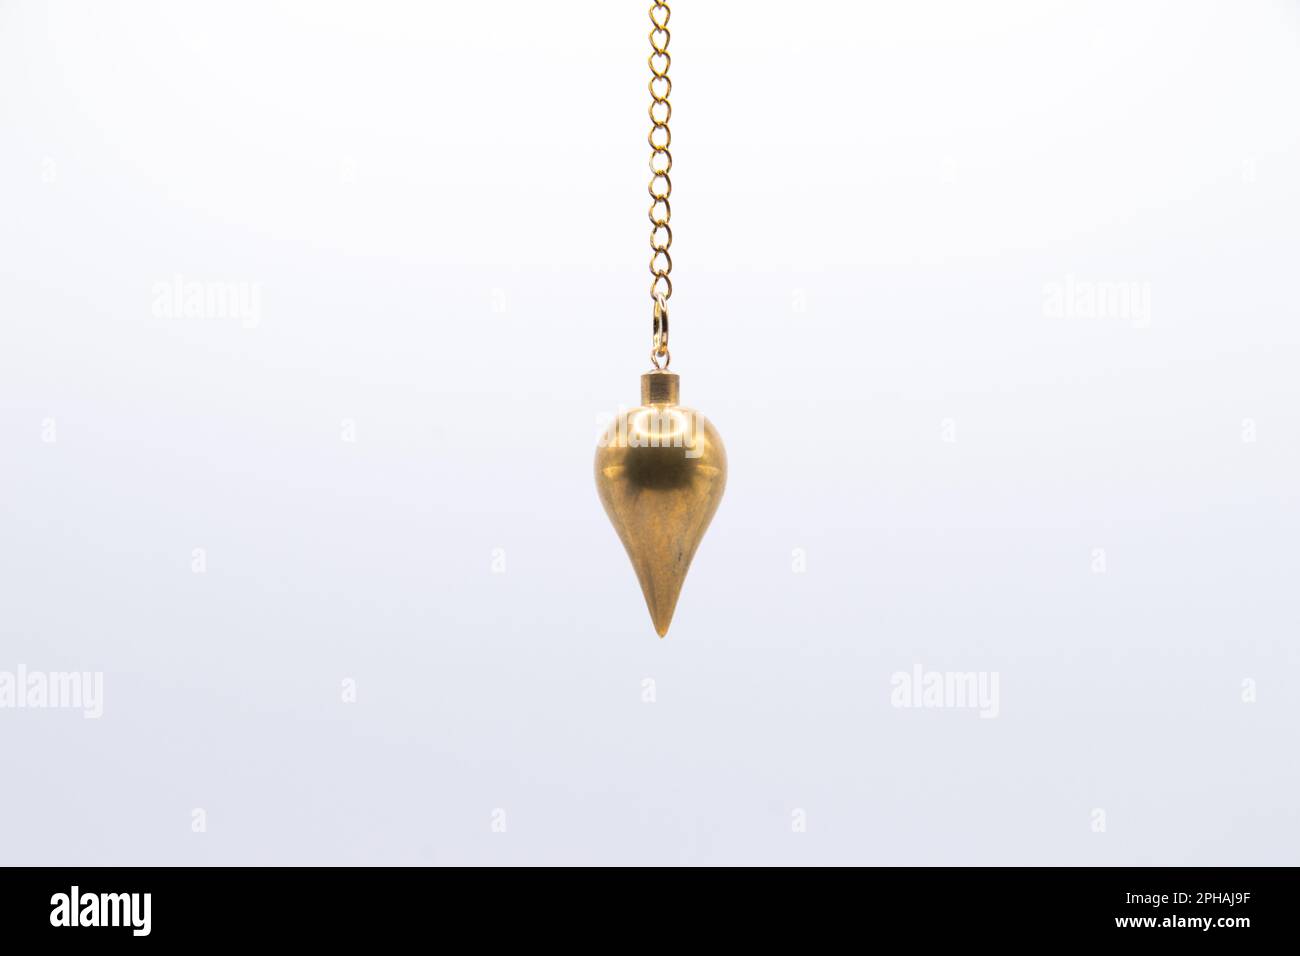 Brass pendulum on chain isolated on white background. Stock Photo